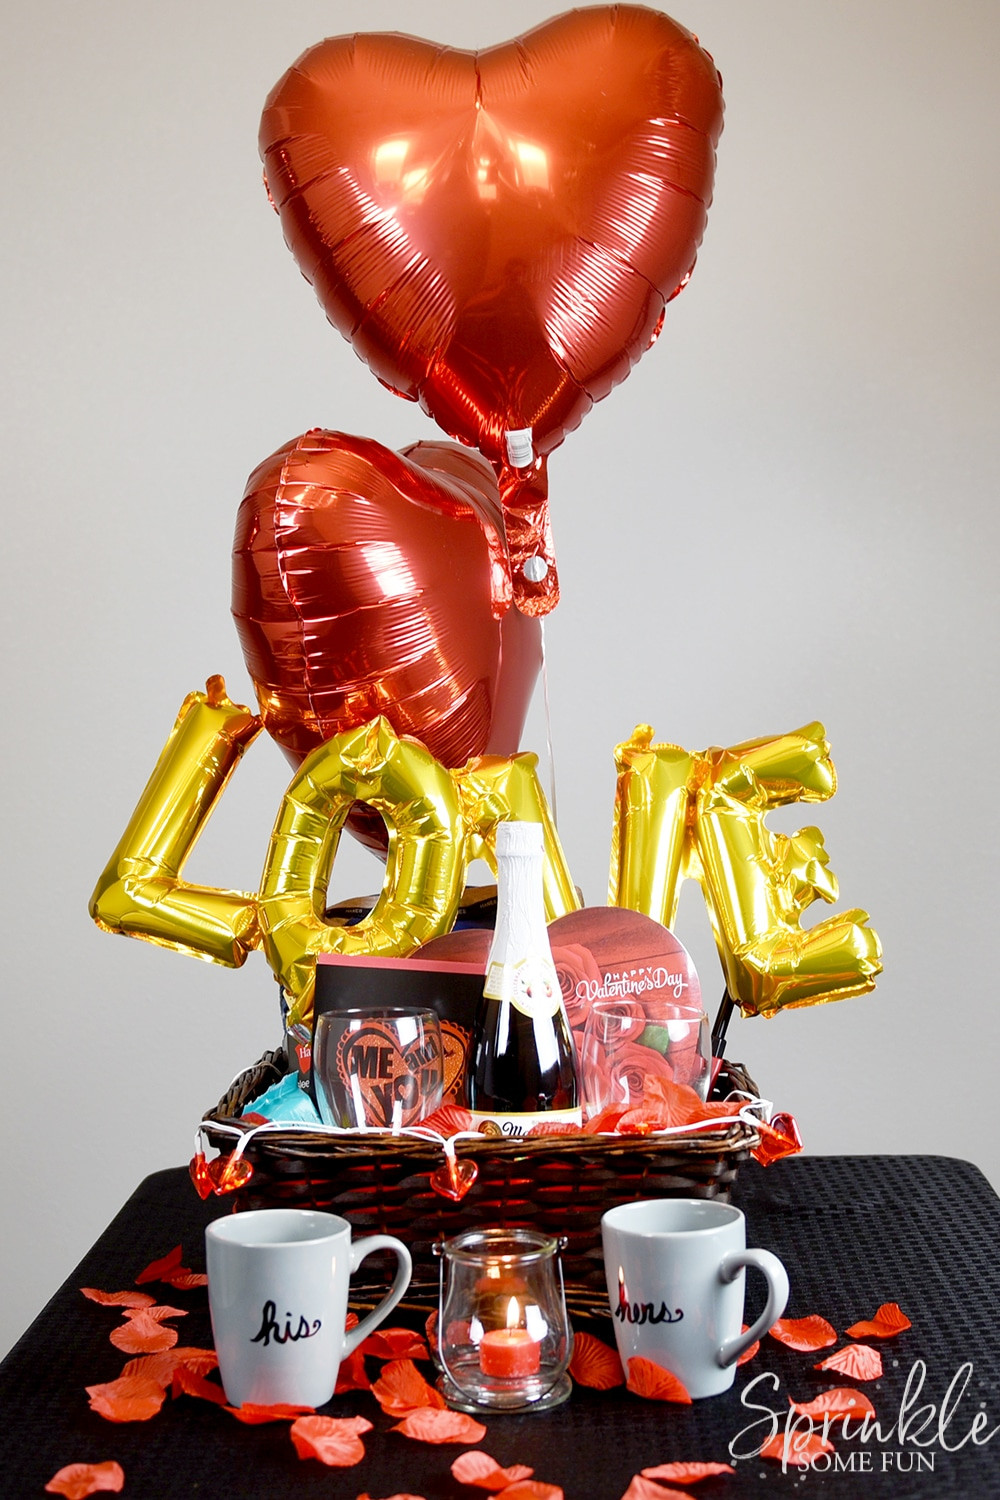 Valentines Ideas Gift
 Romantic Valentine Gift Basket Ideas ⋆ Sprinkle Some Fun